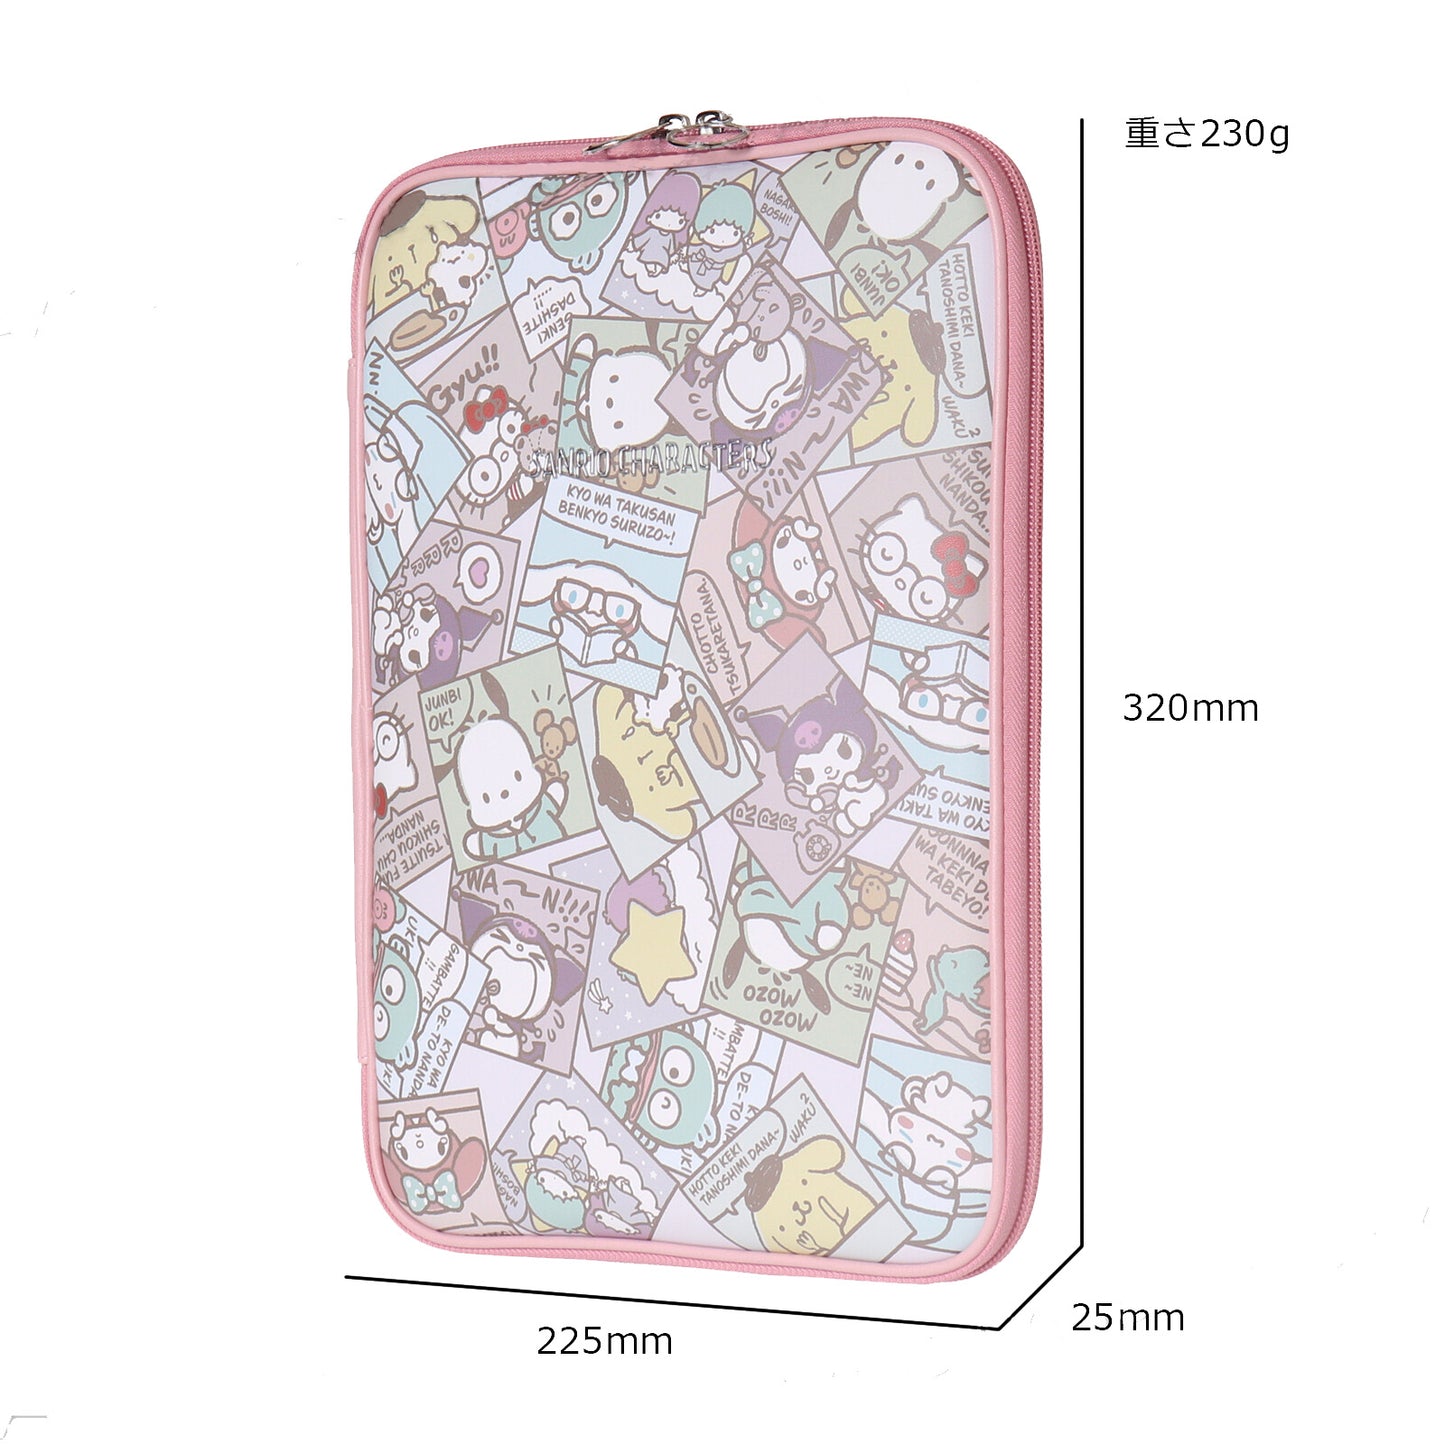 Sanrio Characters iPad/laptop case